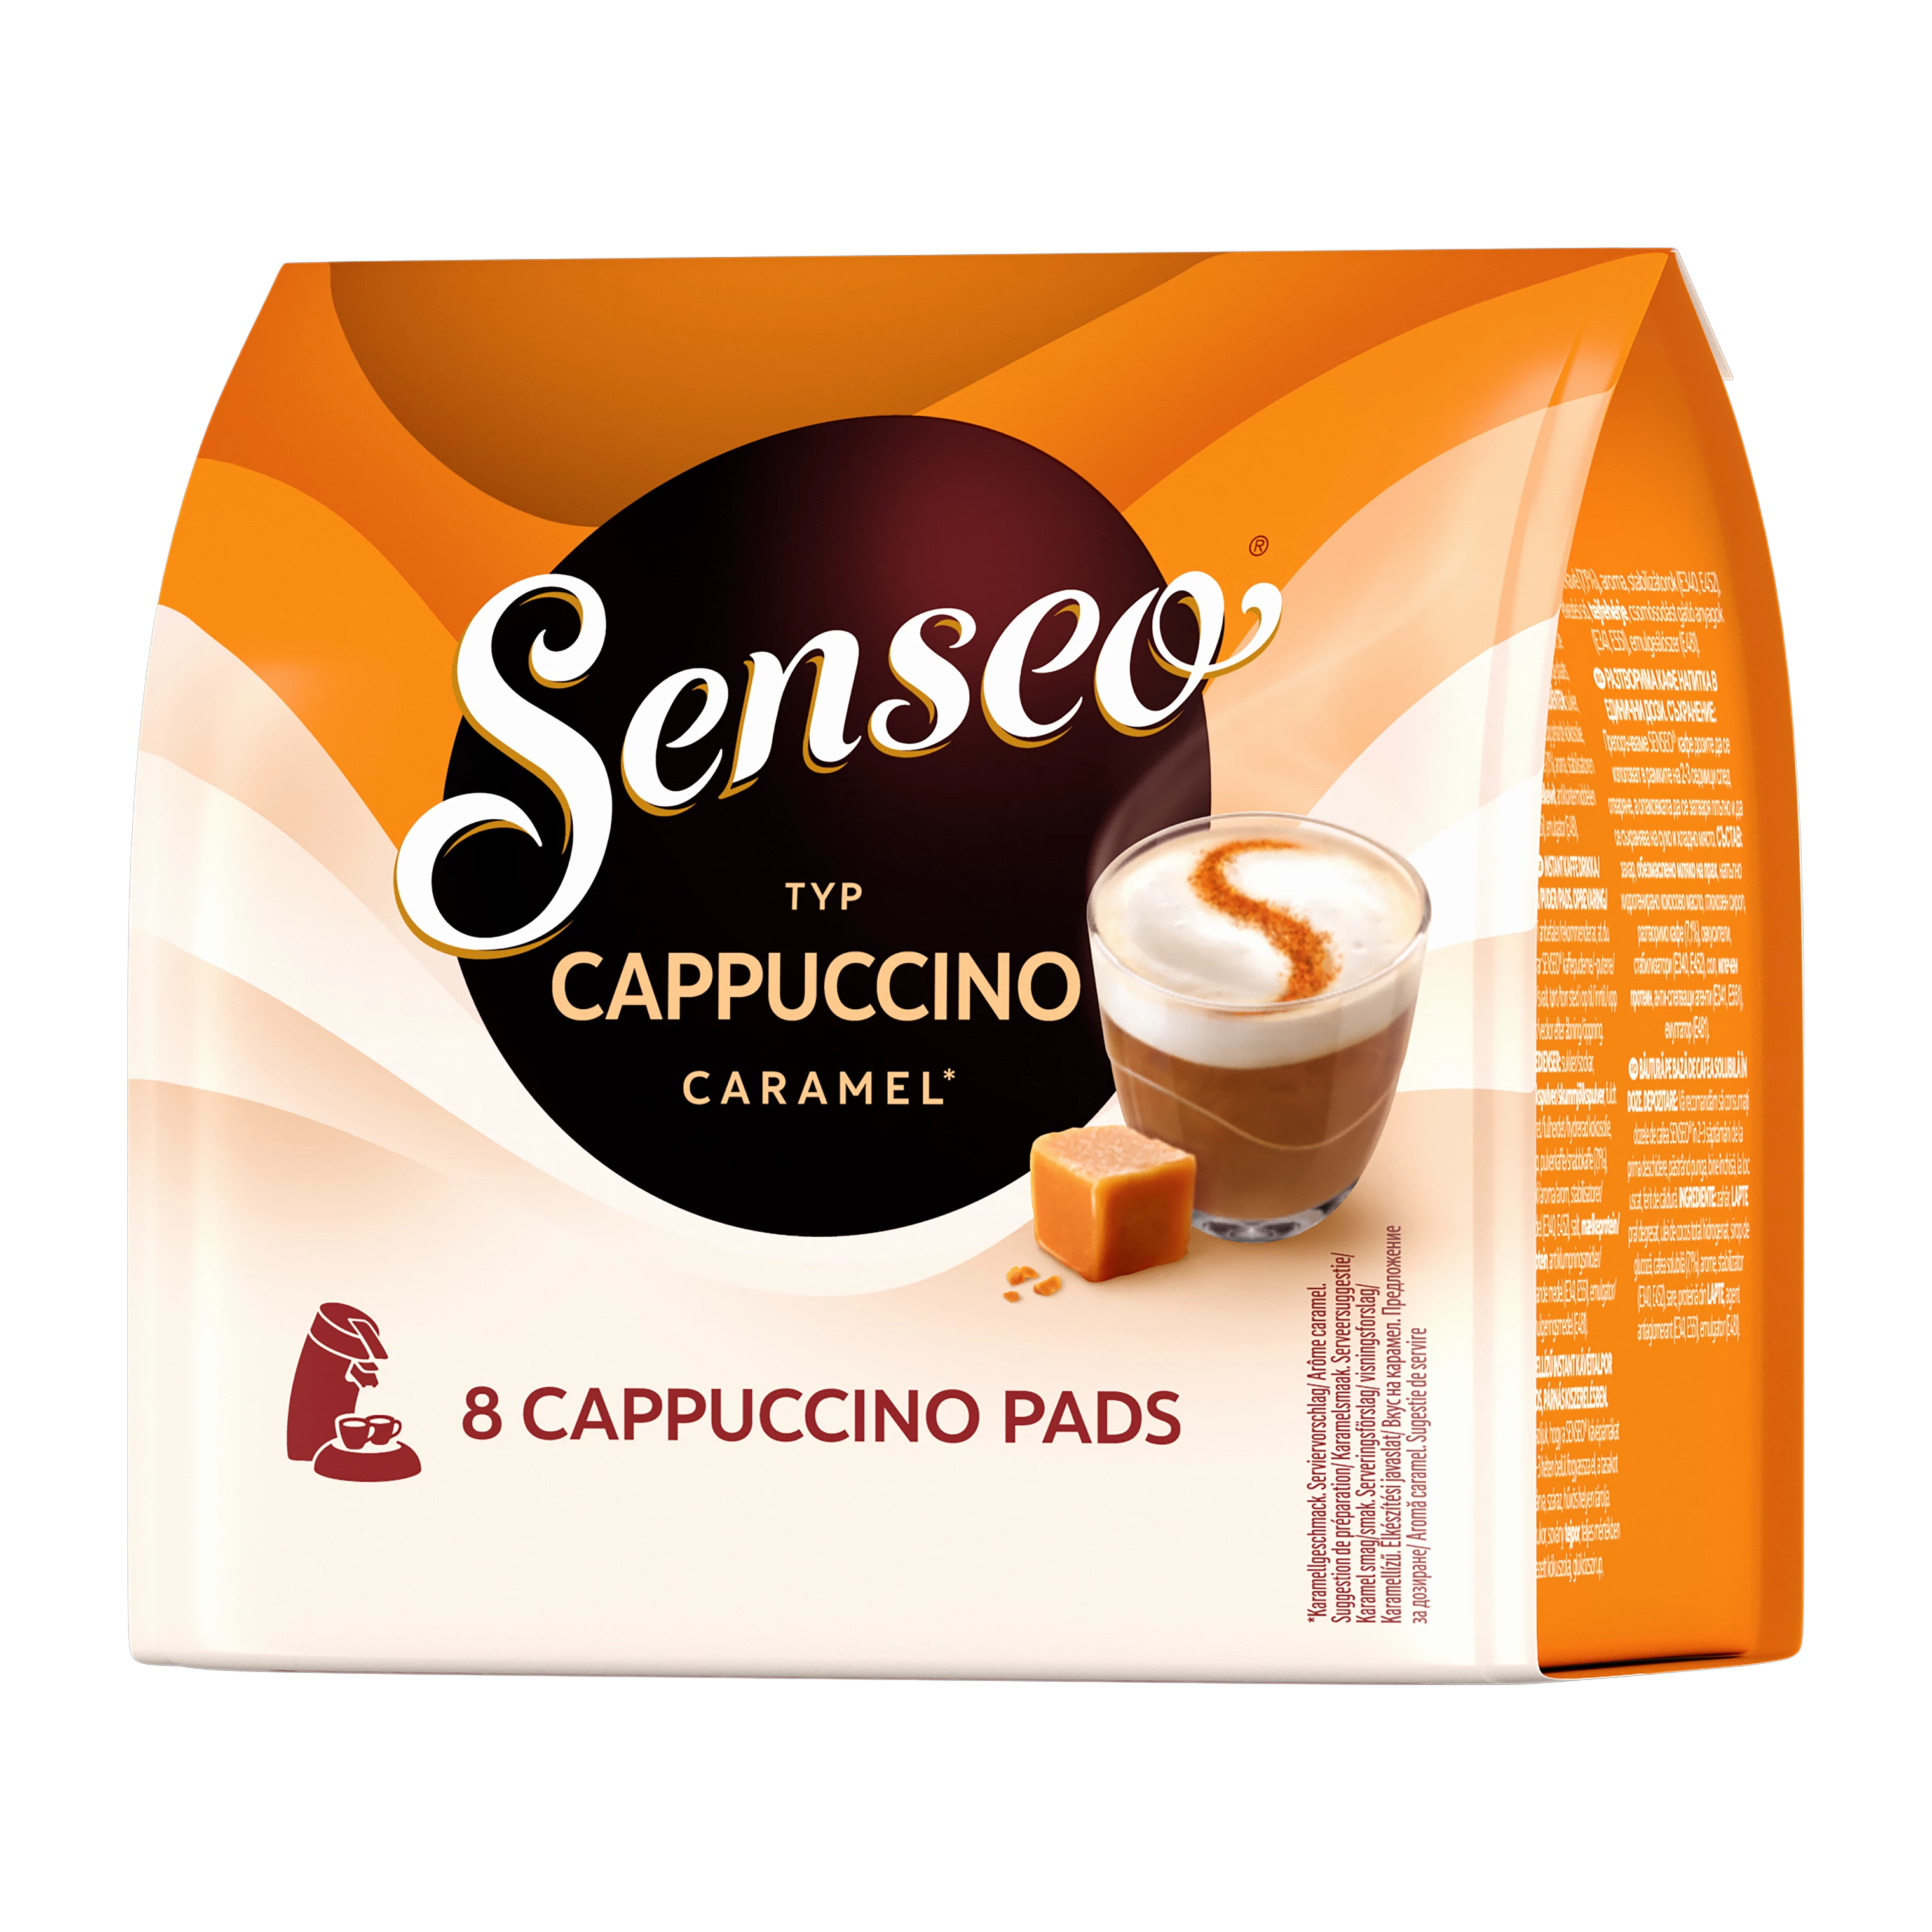 Verpakking van Senseo Cappuccino Caramel cappuccino pads.
